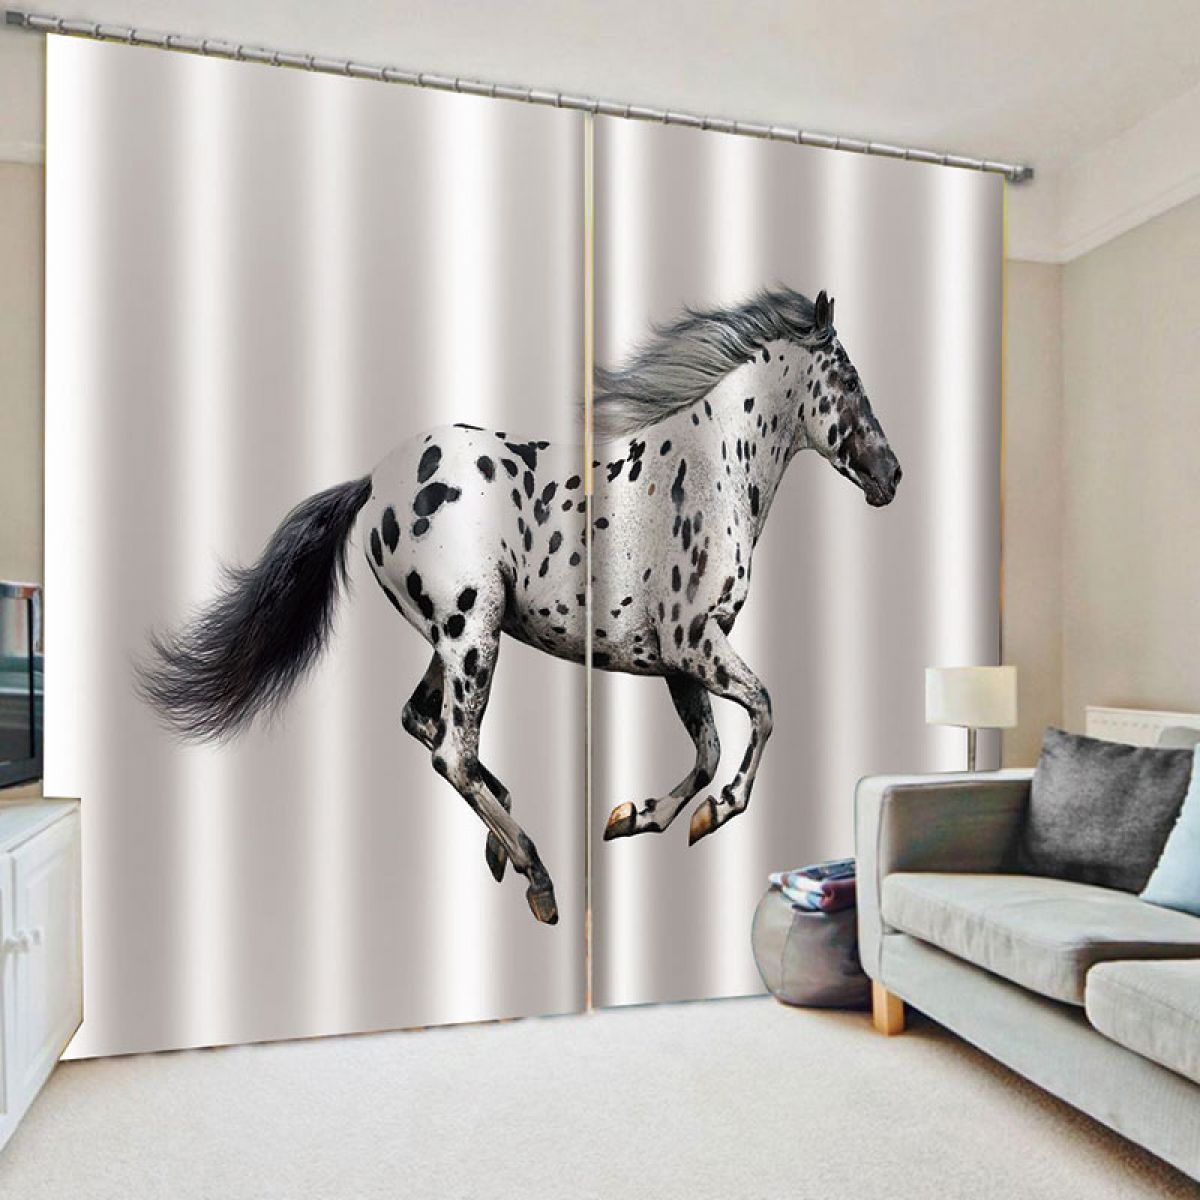 Polka Dot Horse Printed Window Curtain Home Decor